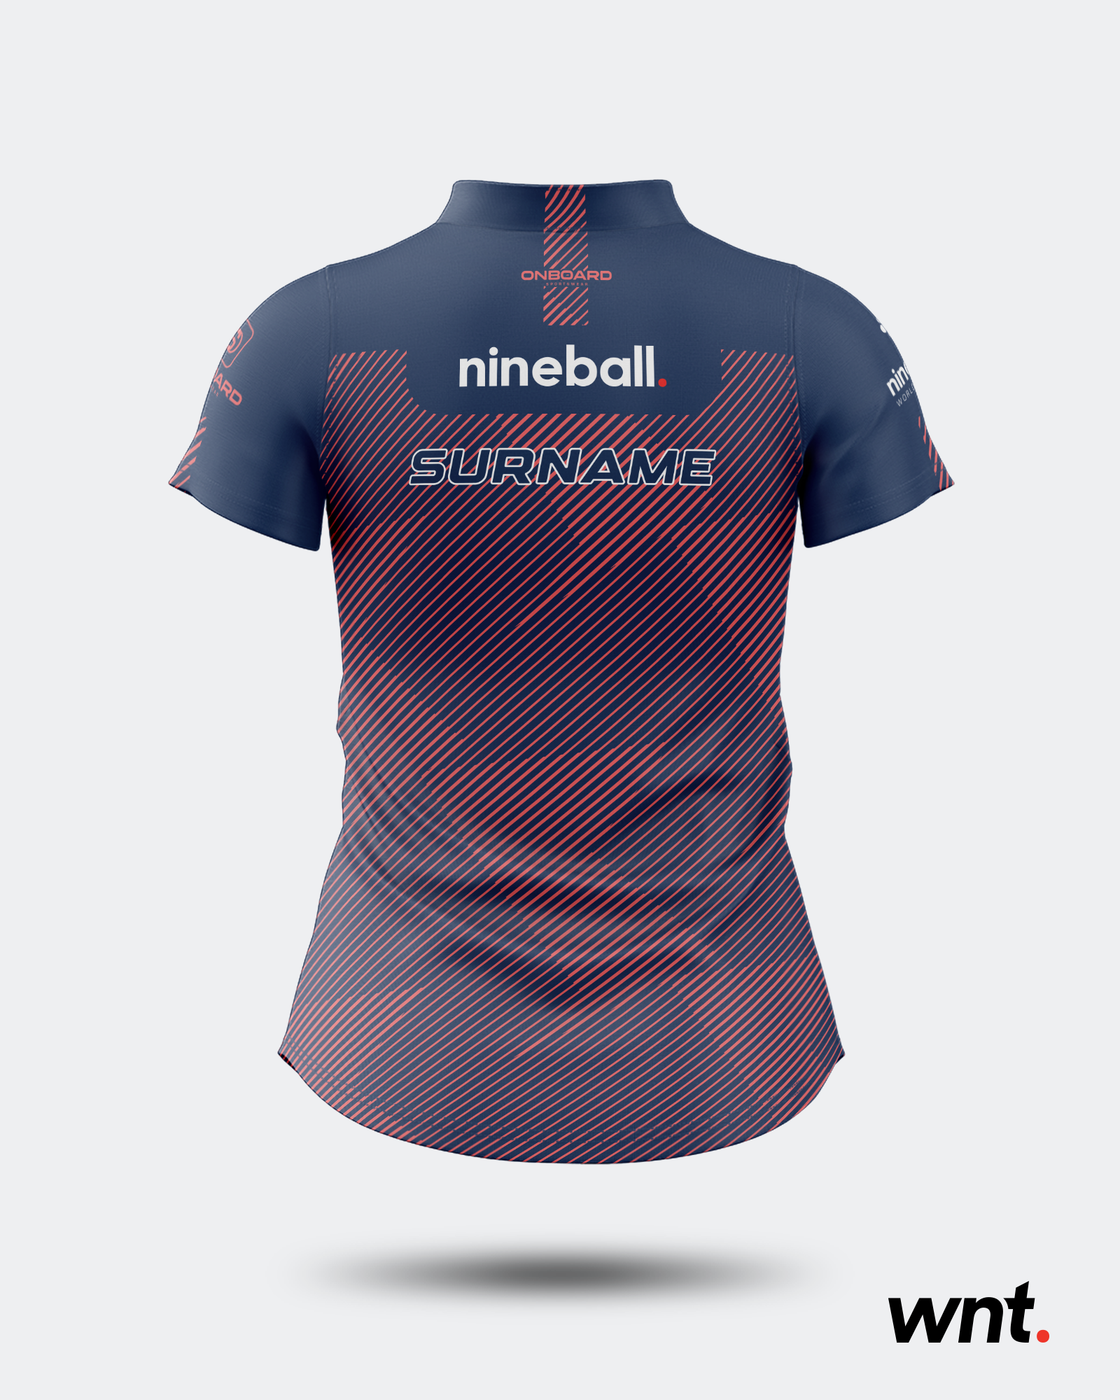 Essential Nineball-Trikot für Damen – Marineblau